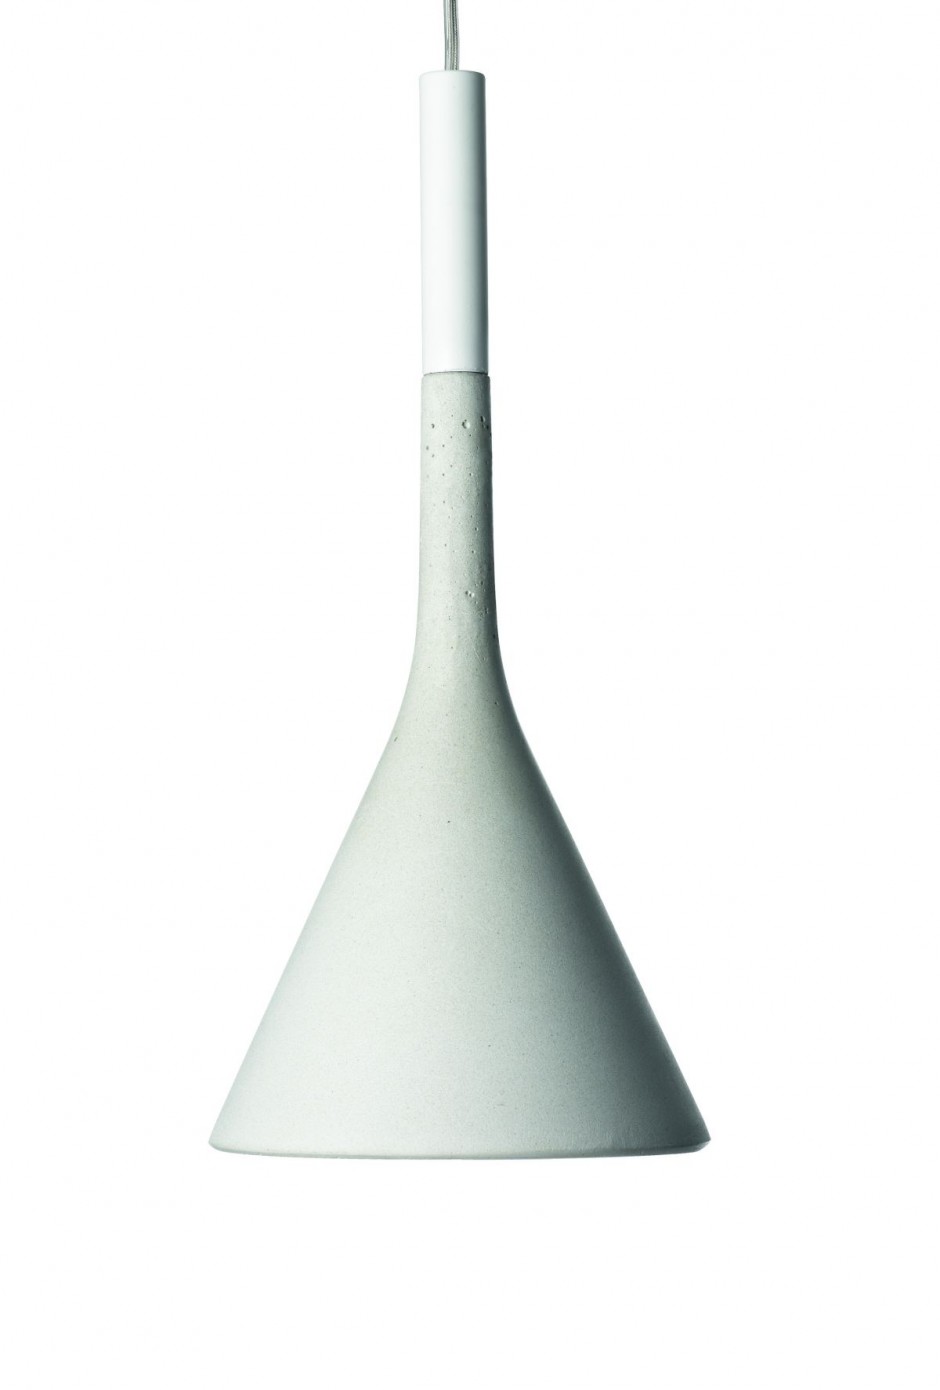 The Aplomb Lamp by Lucidi & Pevere for Foscarini 